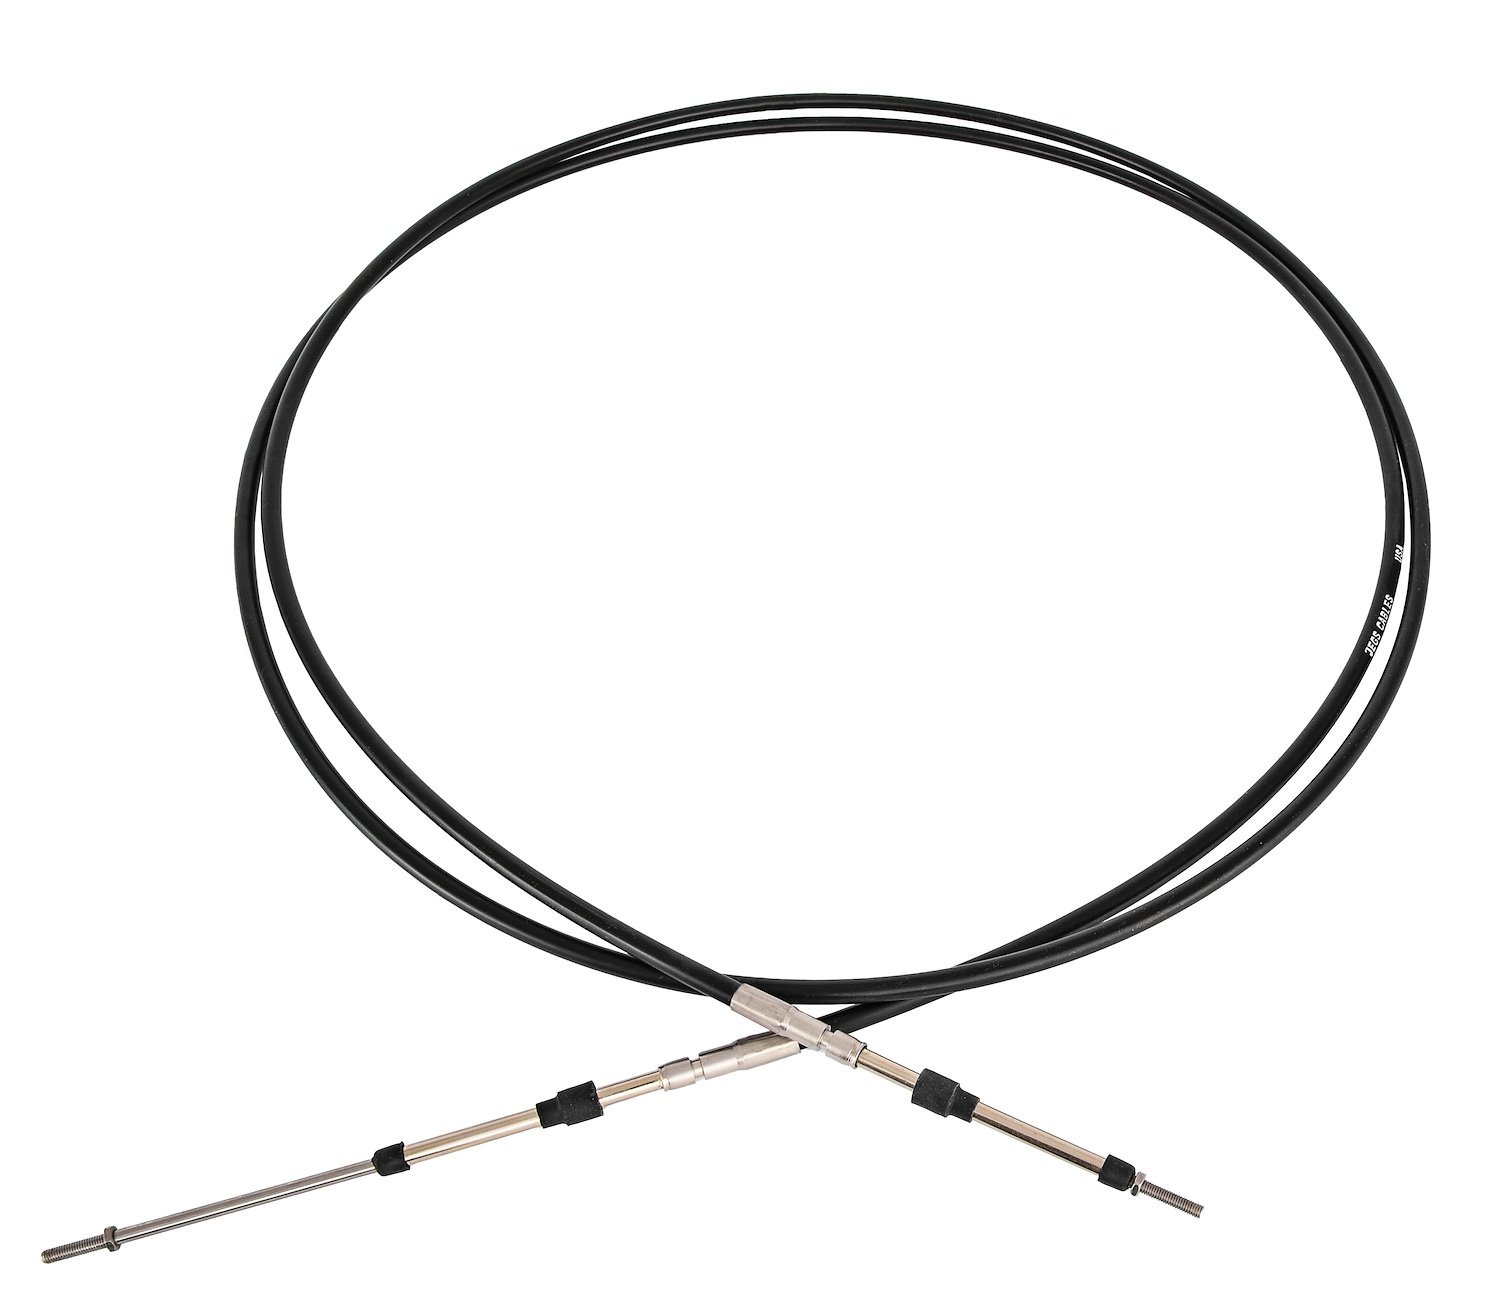 Morse Push/Pull Cable Length: 11 ft. Long